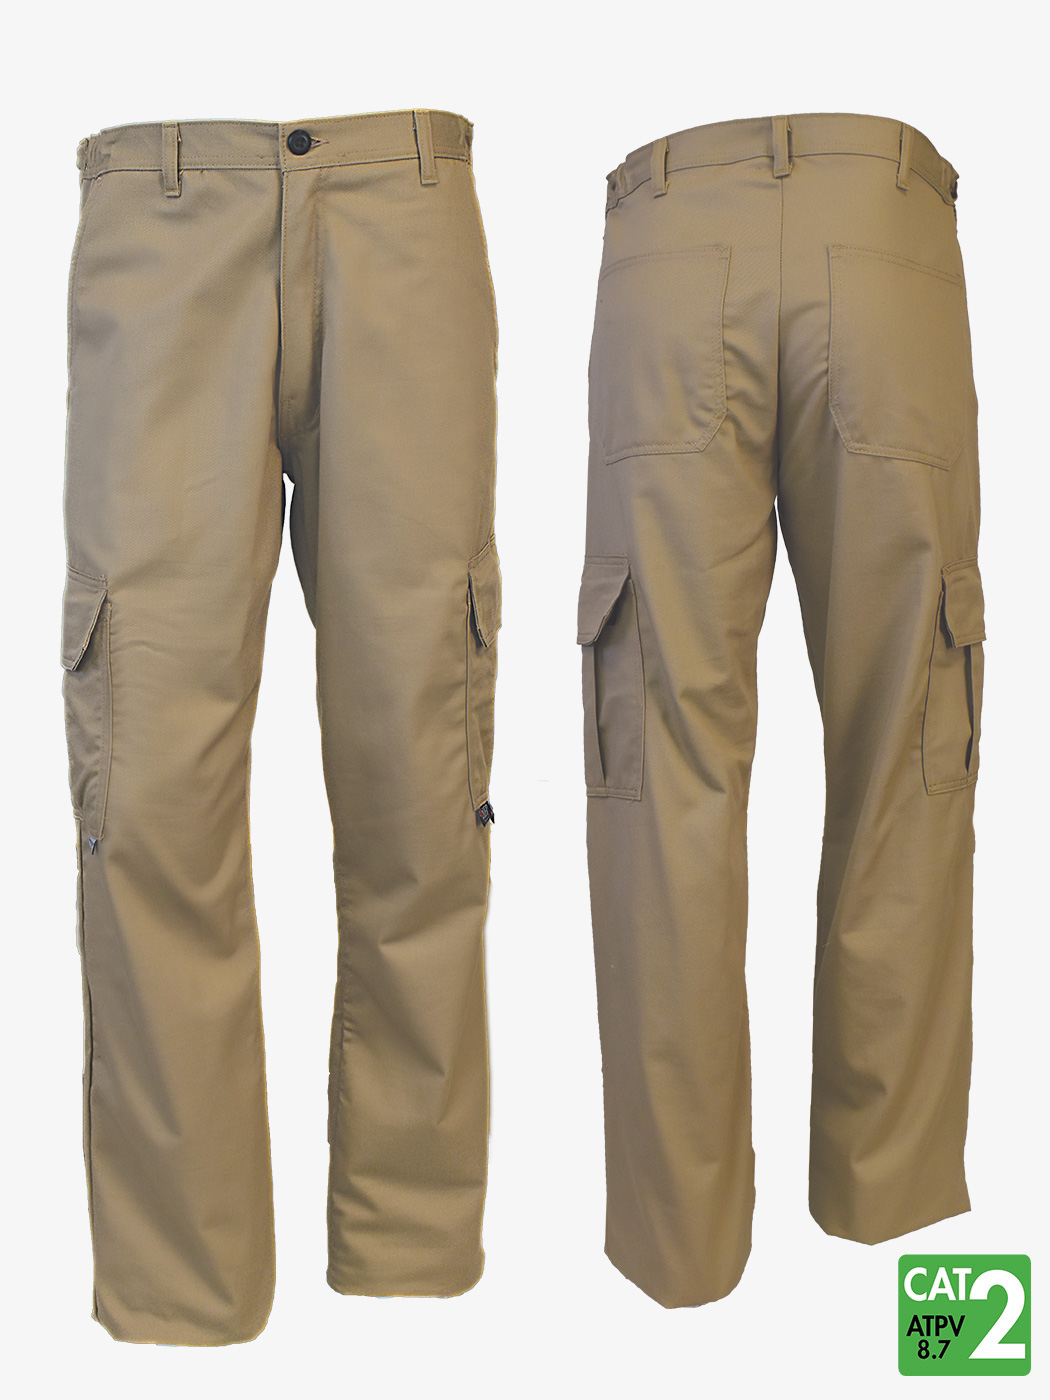 UltraSoft® 7 oz Flame Resistant (FR) Cargo Pants, Ultrasoft Summerwear, FR Summerwear, Westex Ultrasoft, FR Work Shirts & FR Pants